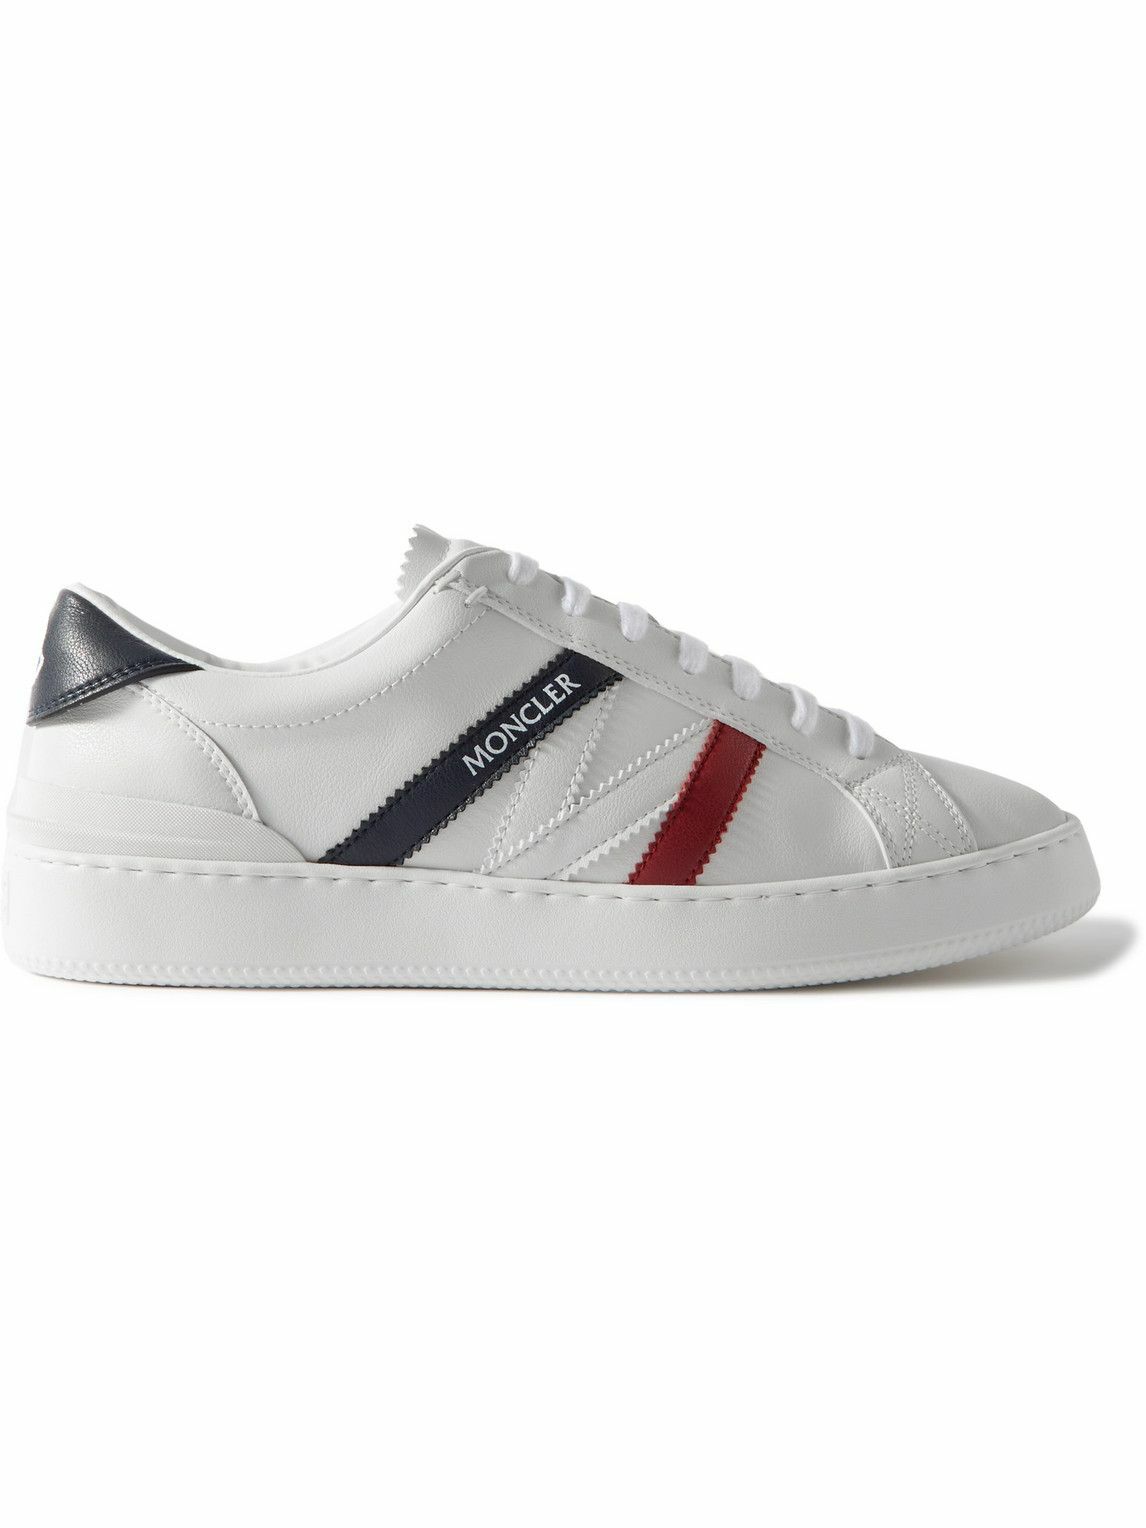 Moncler - Monaco M Striped Leather Sneakers - White Moncler